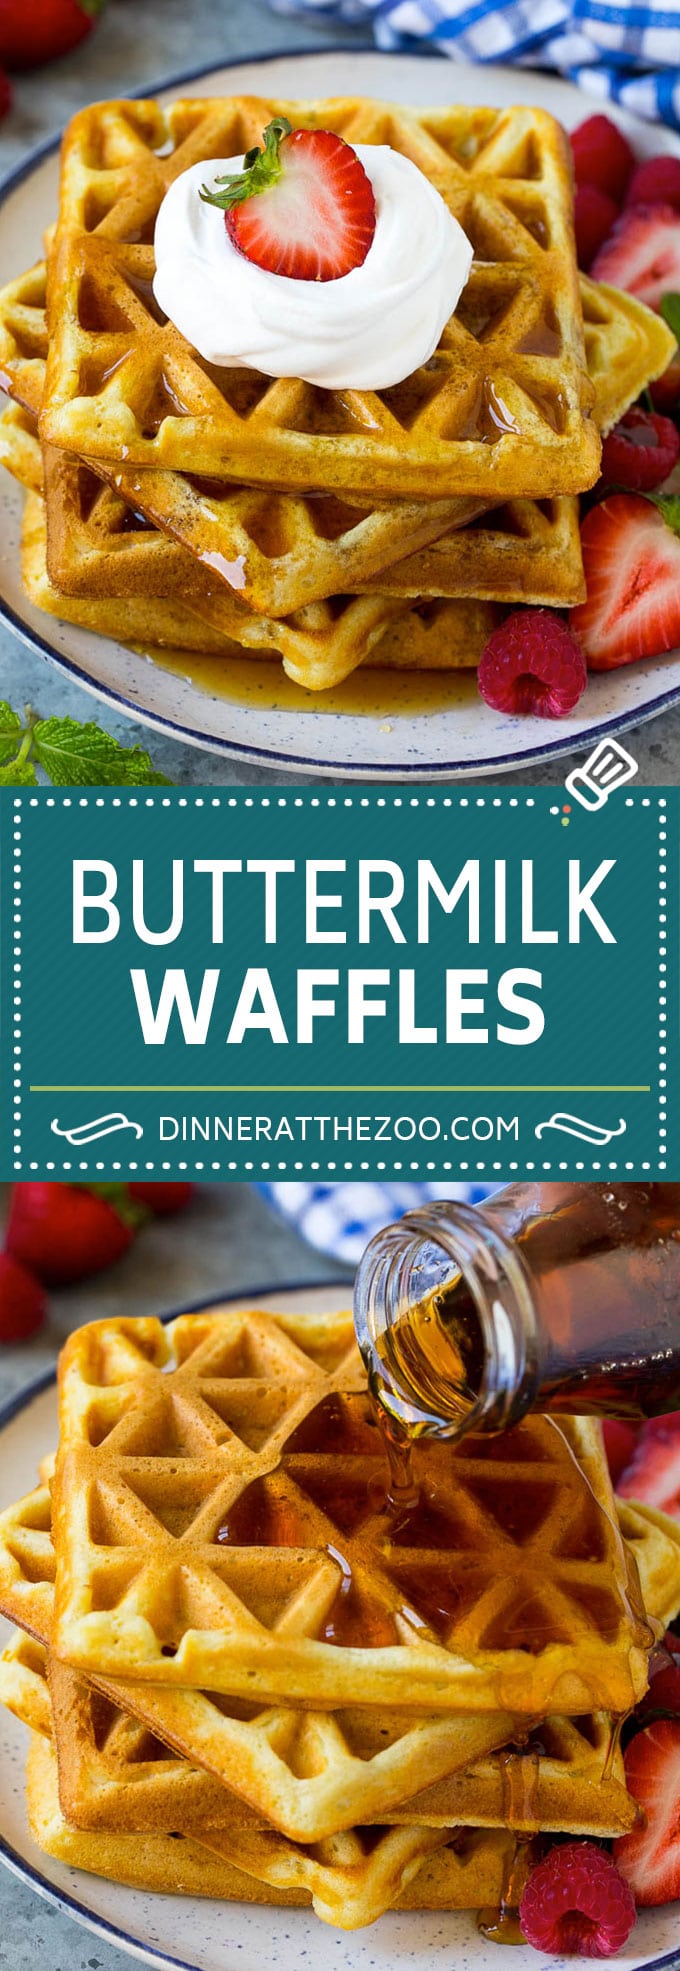 Buttermilk Waffles Recipe | Homemade Waffles #waffles #breakfast #brunch #dinneratthezoo